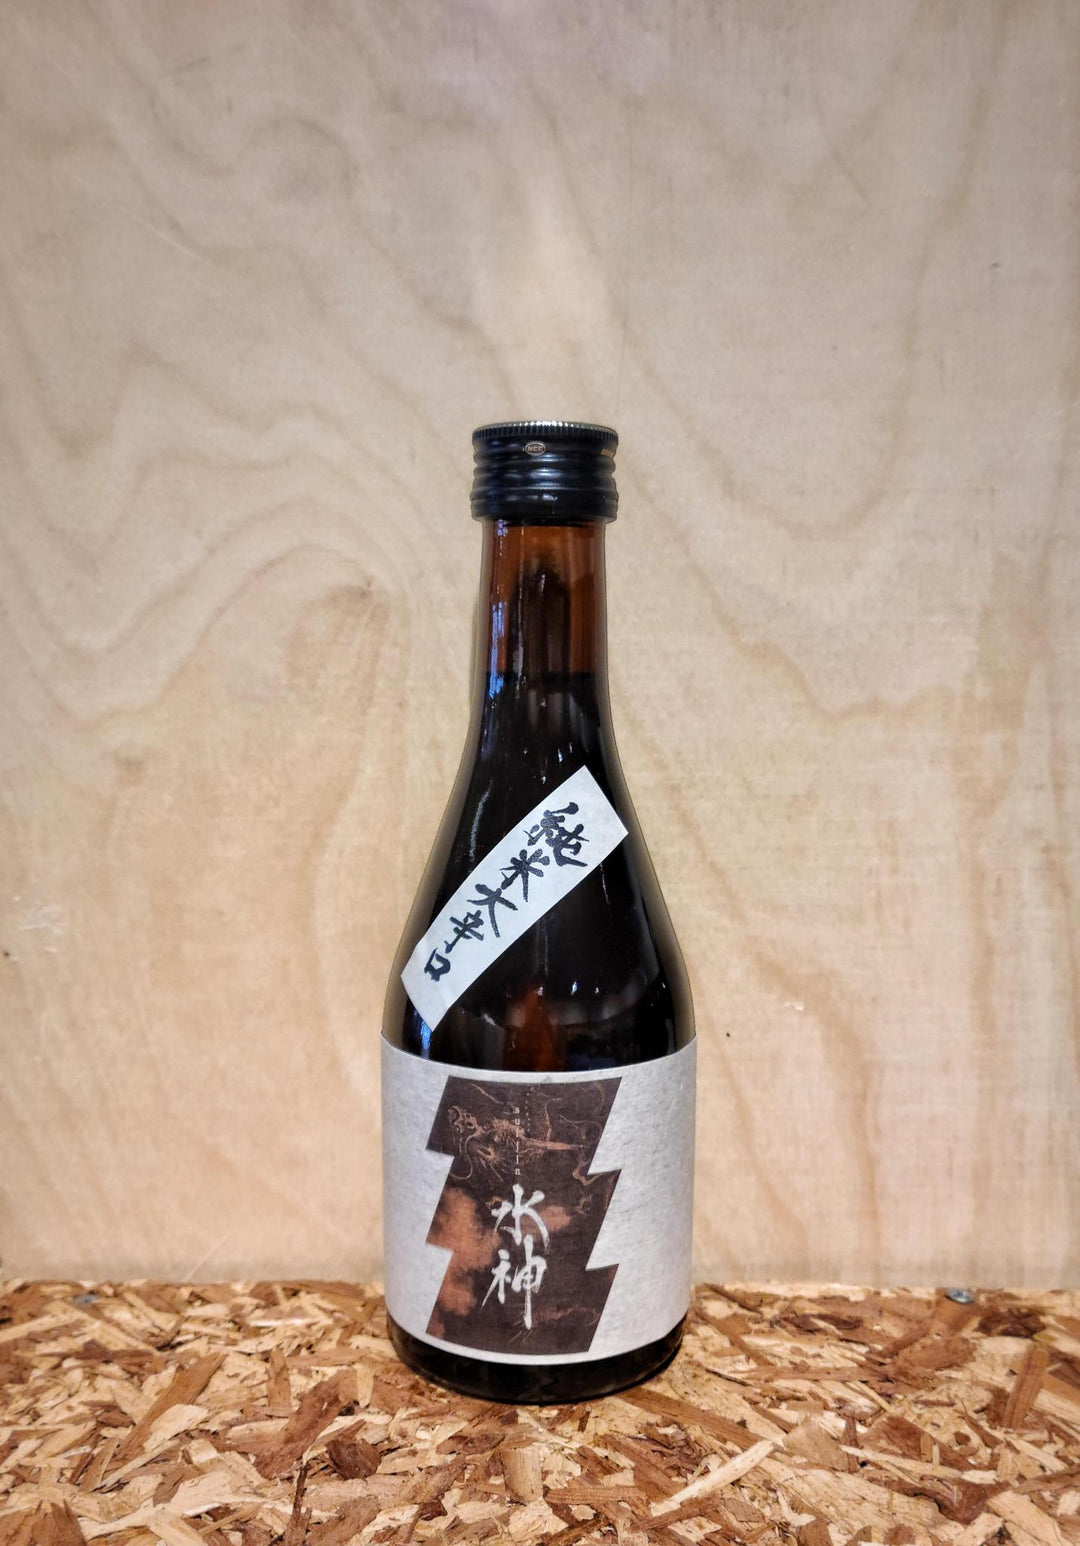 Asabiraki Suijin Junmai Super Dry Sake (Iwate Prefecture, Japan)